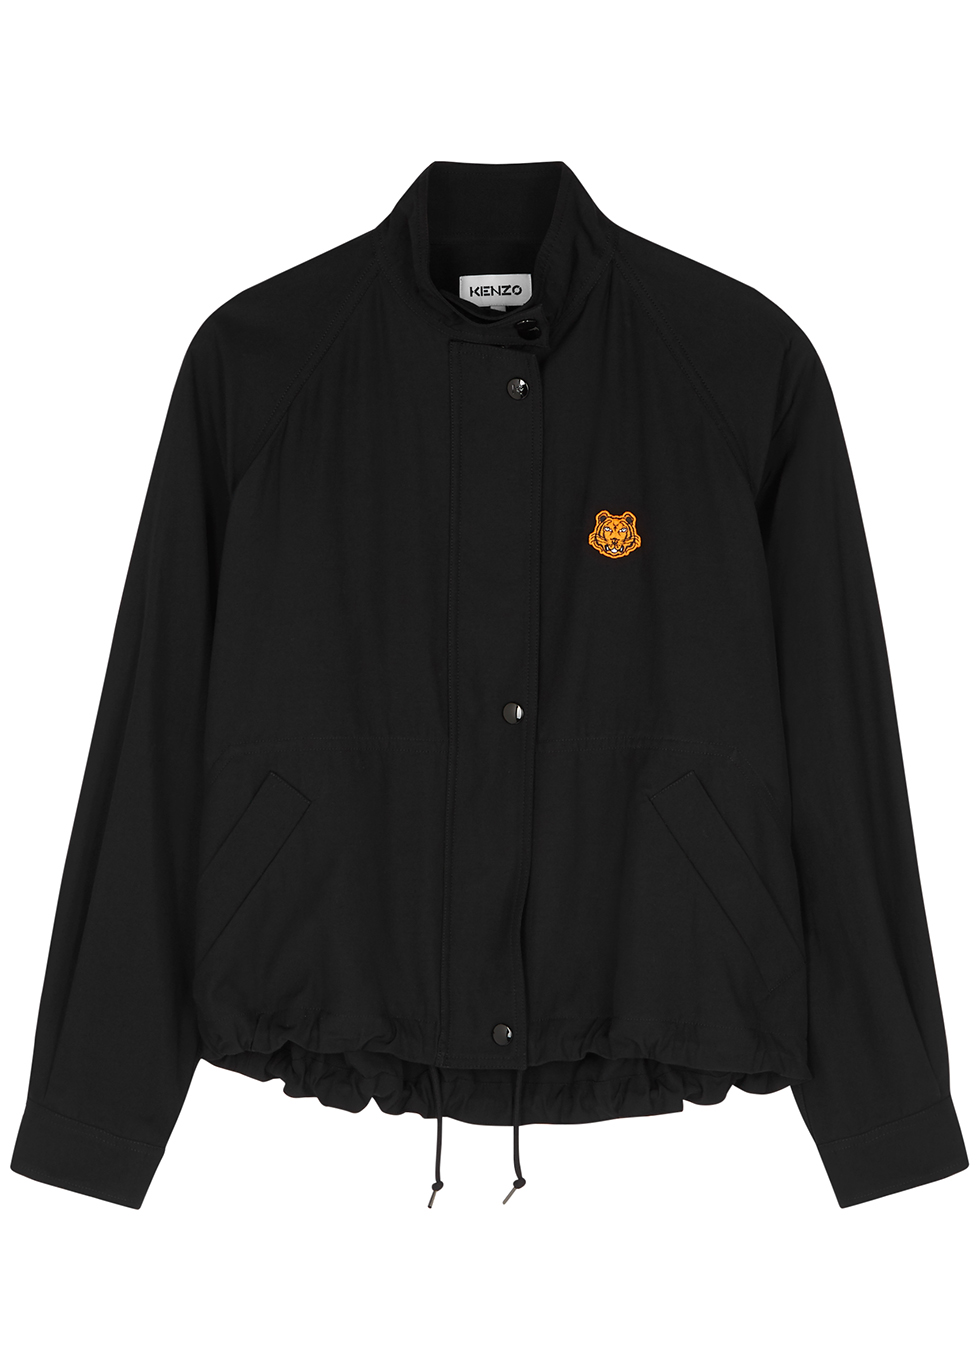 Black twill jacket